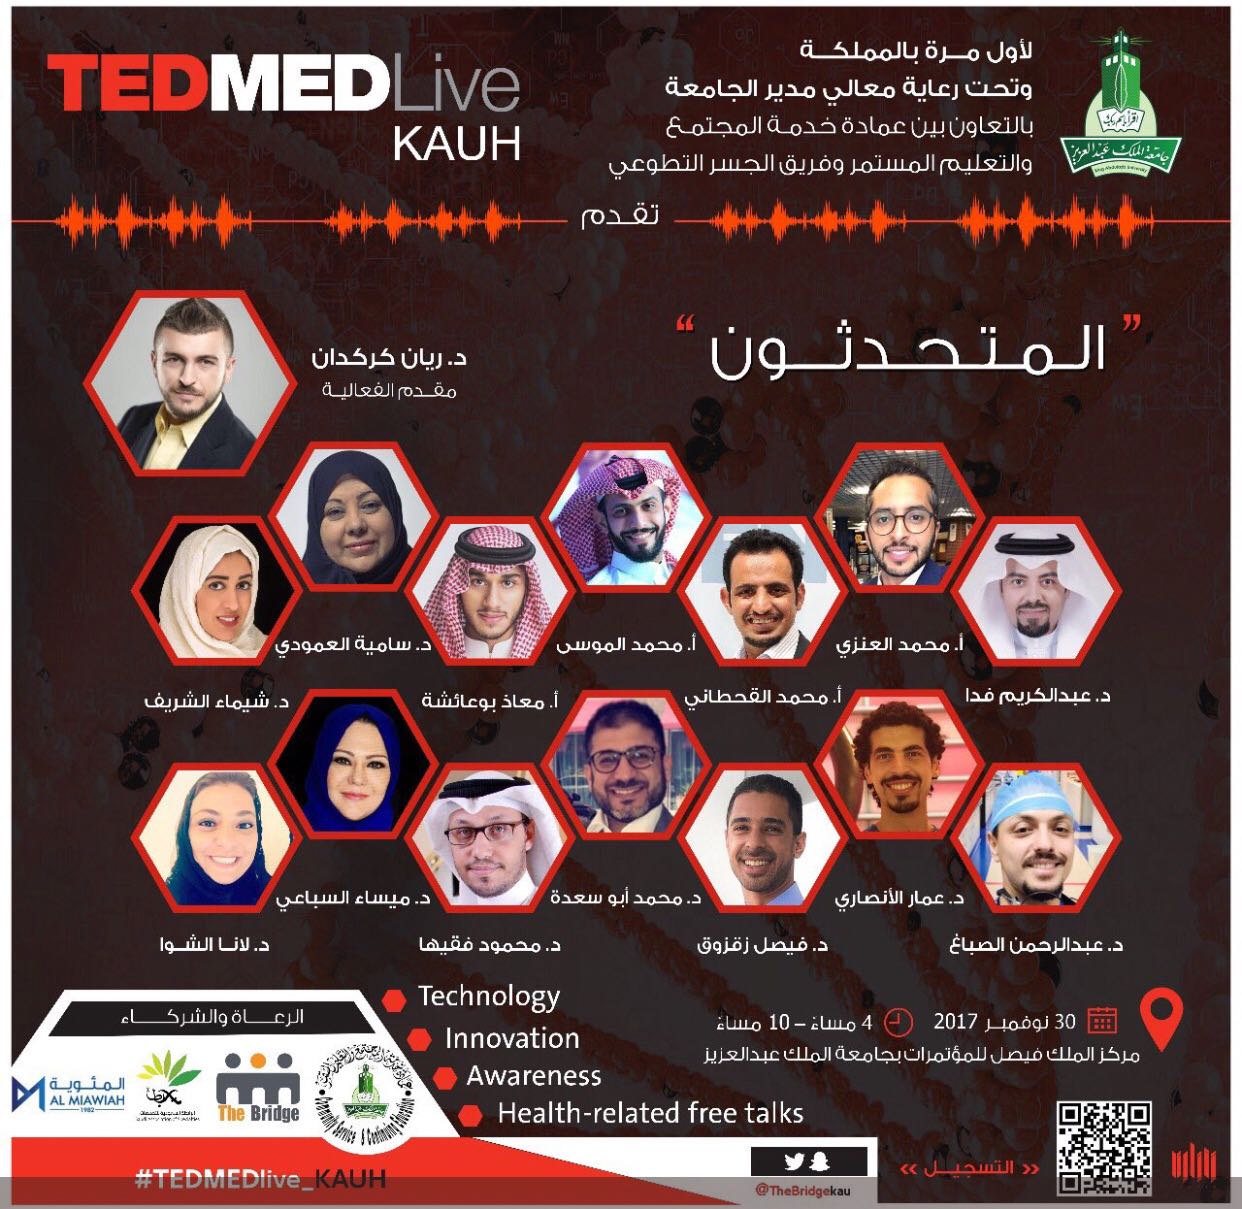 TEDMED Medical Conference - dr mahmoud fakiha